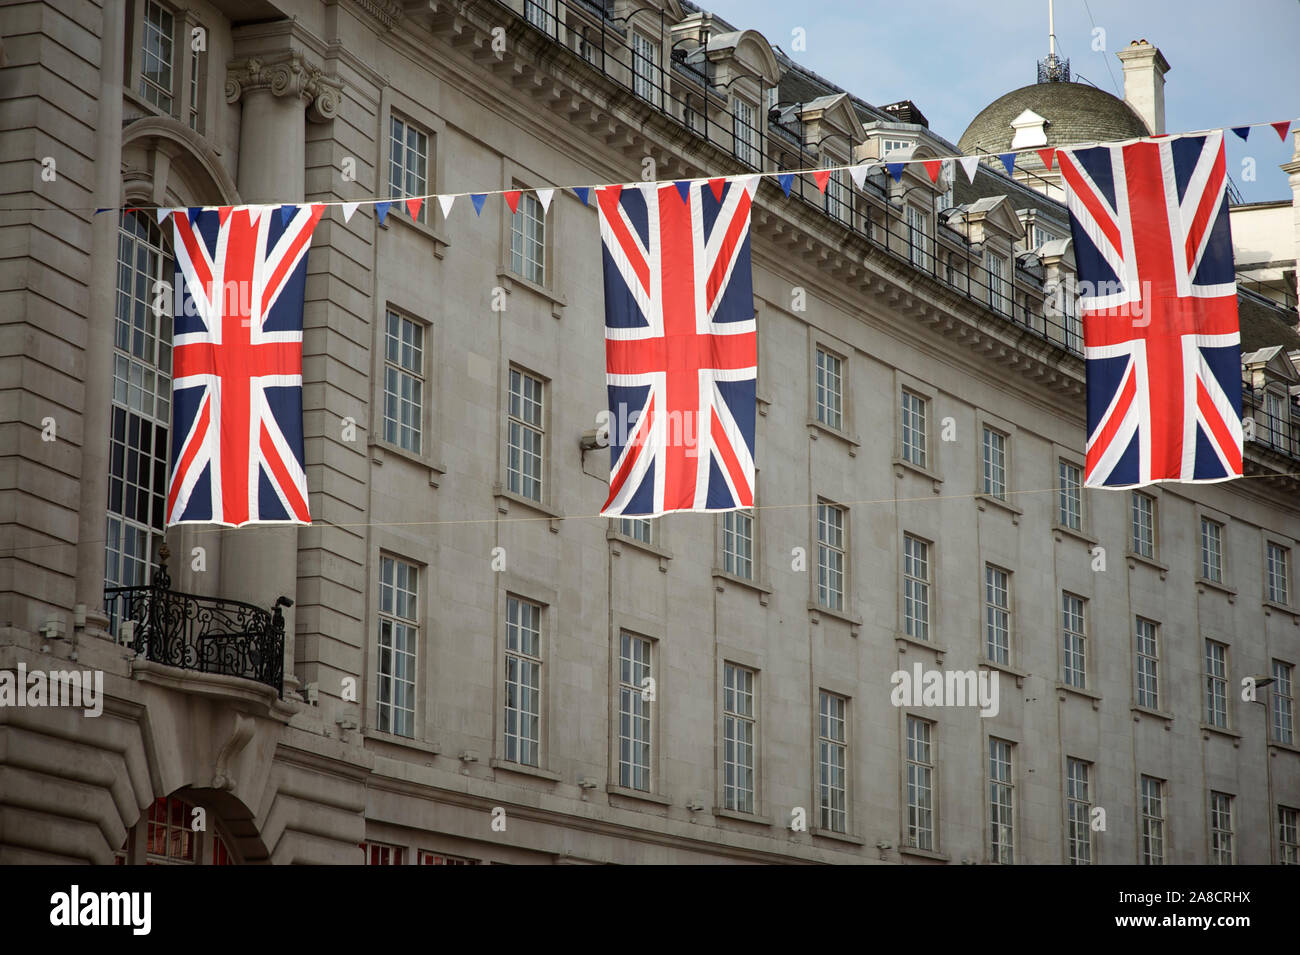 Union Jack flag decorations strung above the streets of London, UK under soft blue sky Stock Photo